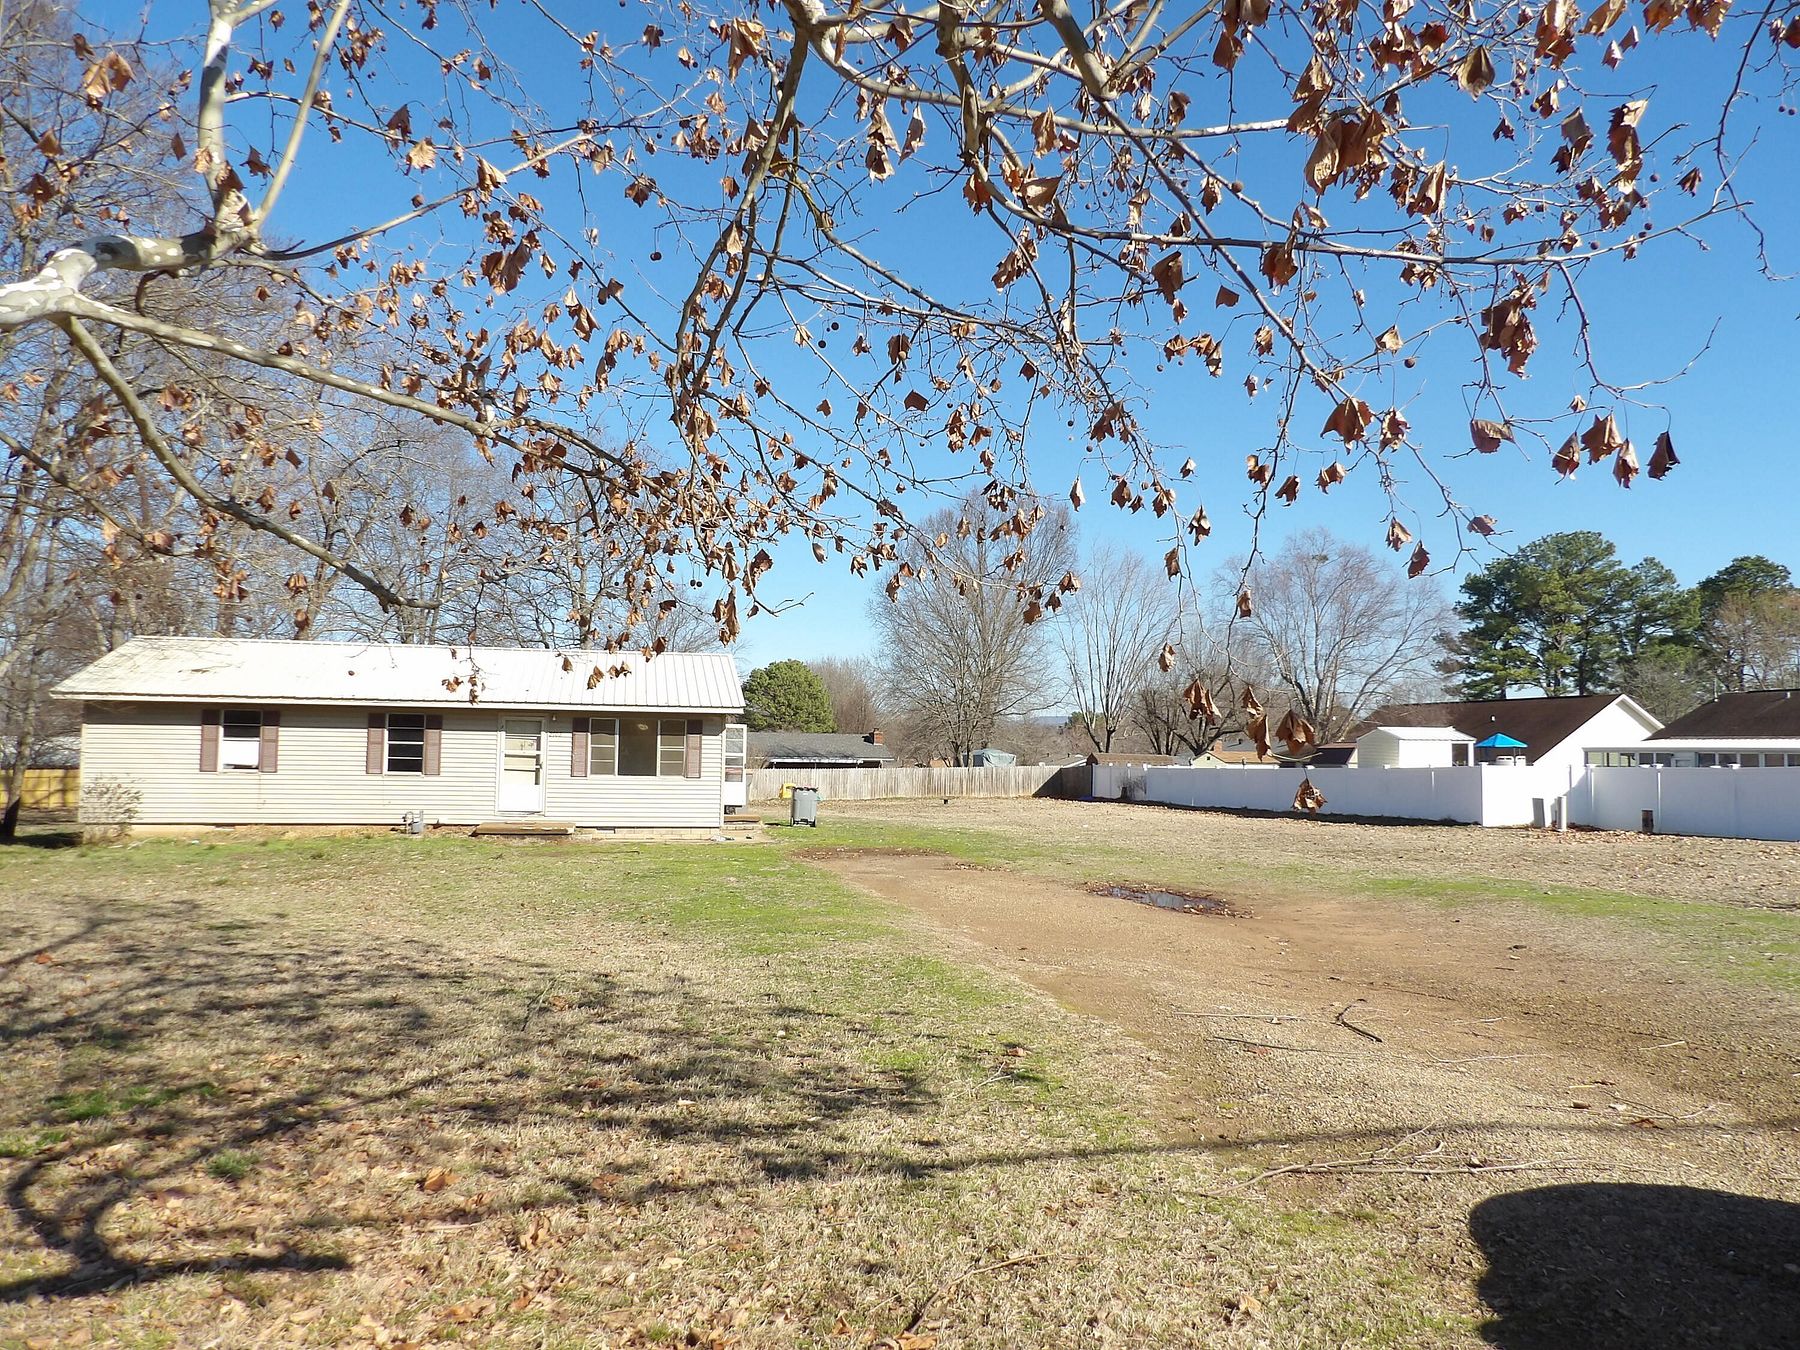 1 Acre of Commercial Land for Sale in Ozark, Arkansas